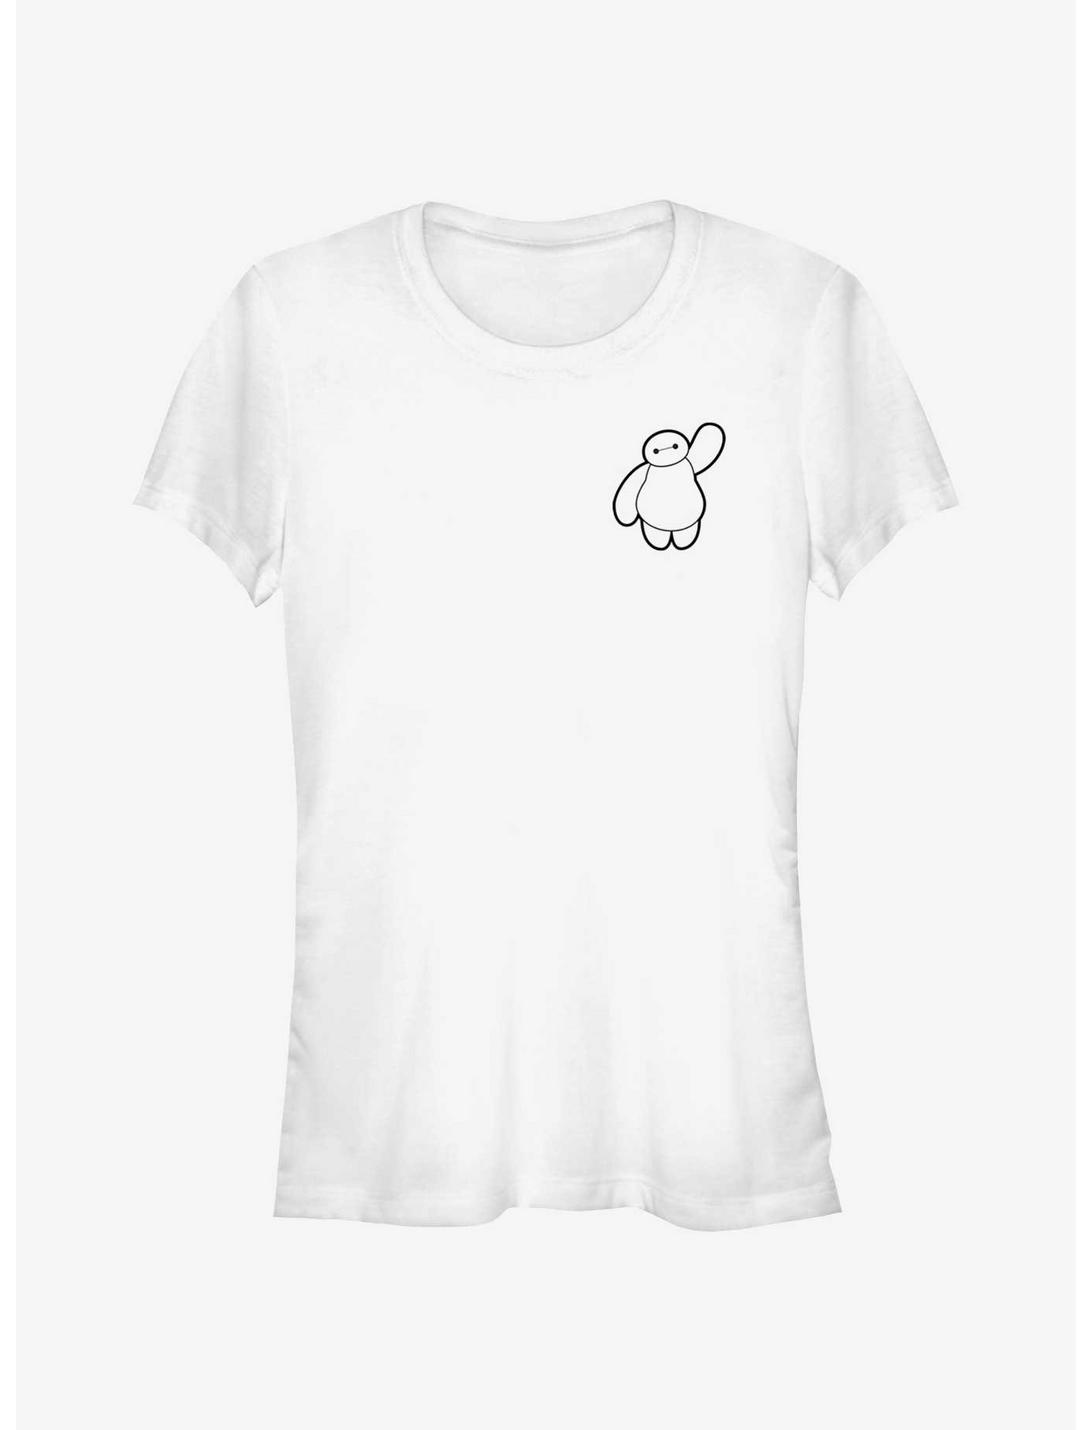 Disney Big Hero 6 Pocket Baymax Girl's T-Shirt, WHITE, hi-res